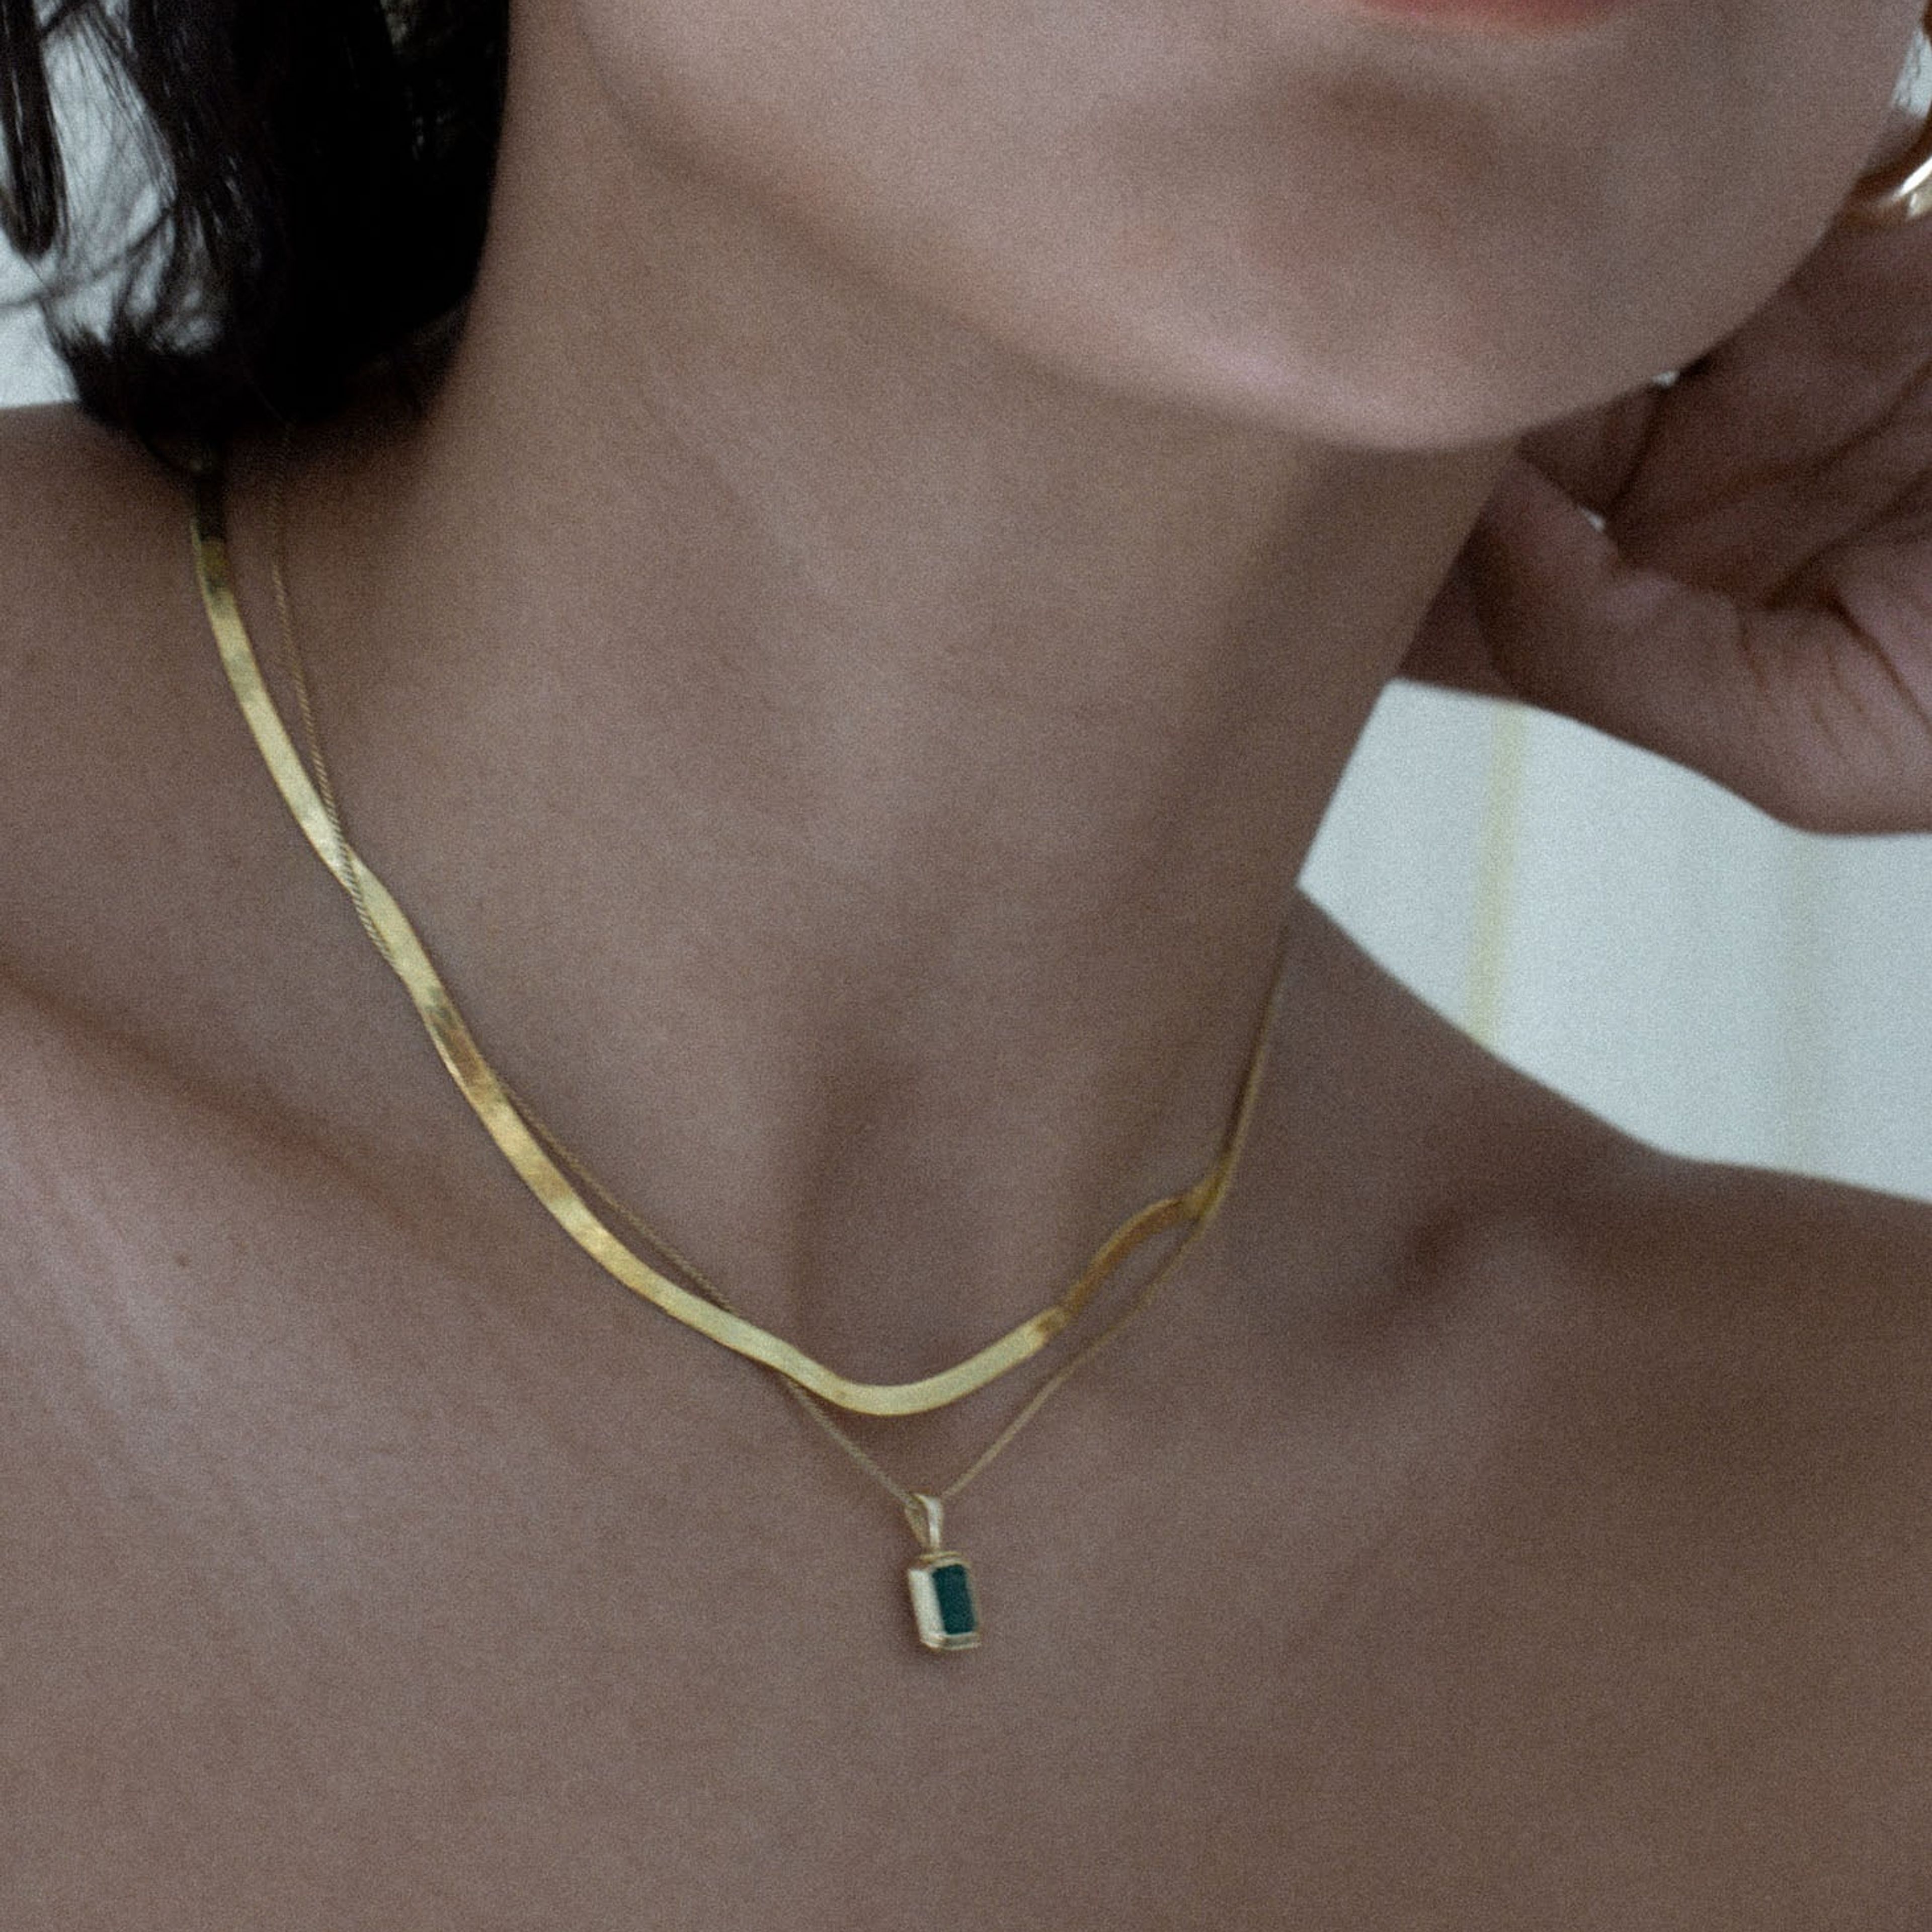 Petite Carter Herringbone Chain Necklace